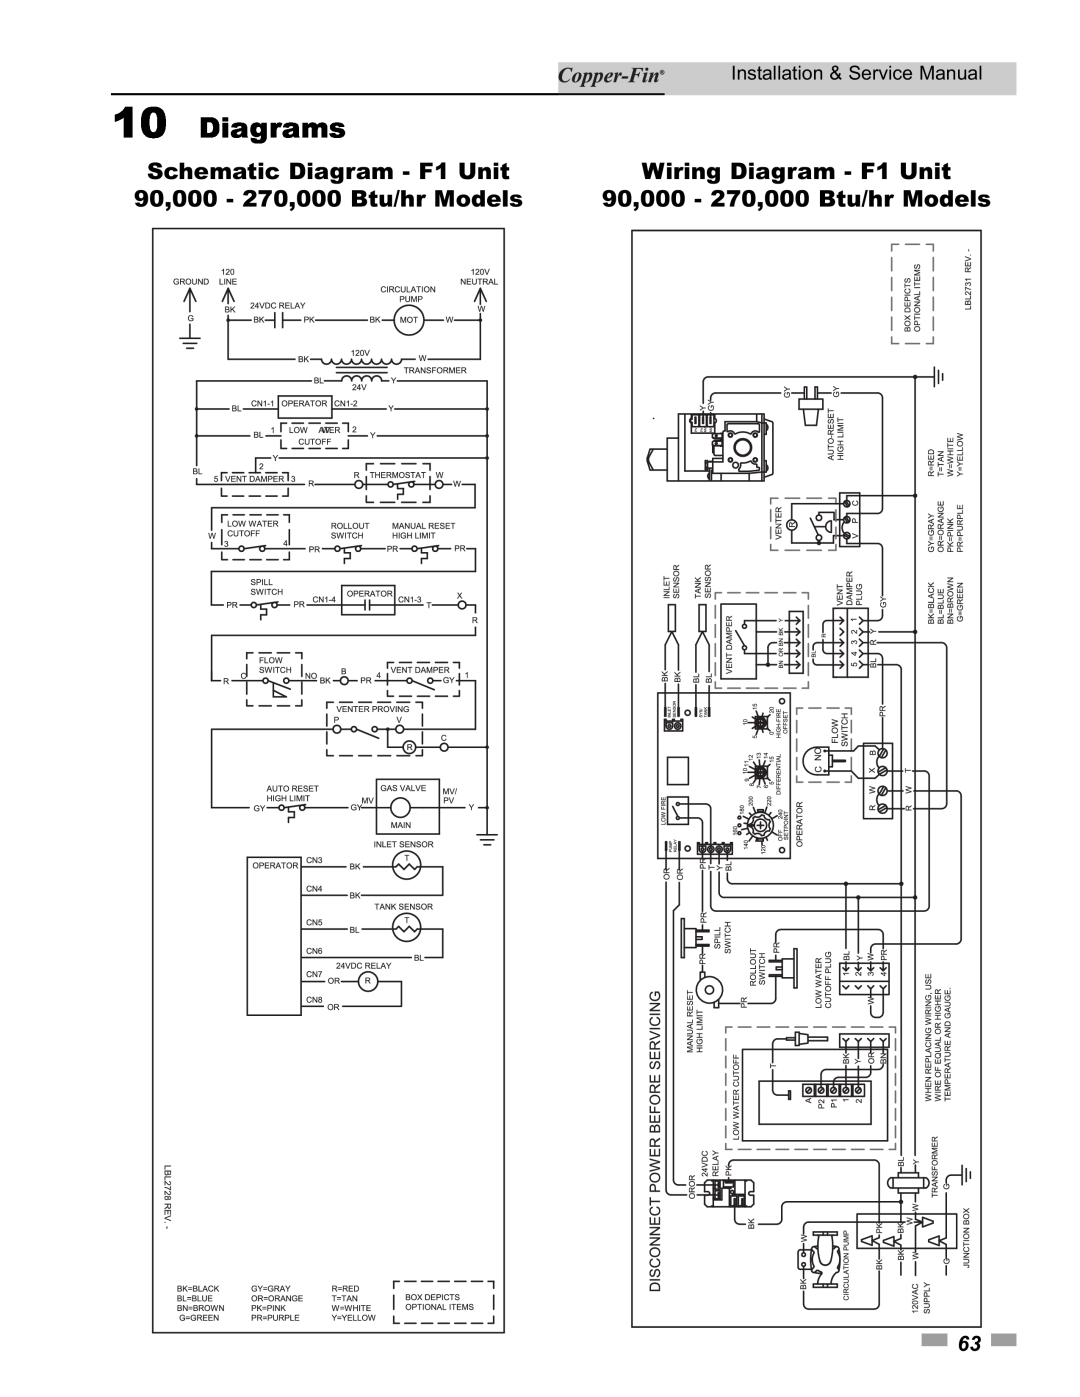 Lochinvar 500 Diagrams, Schematic Diagram - F1 Unit, 90,000 - 270,000 Btu/hr Models, Wiring Diagram - F1 Unit 